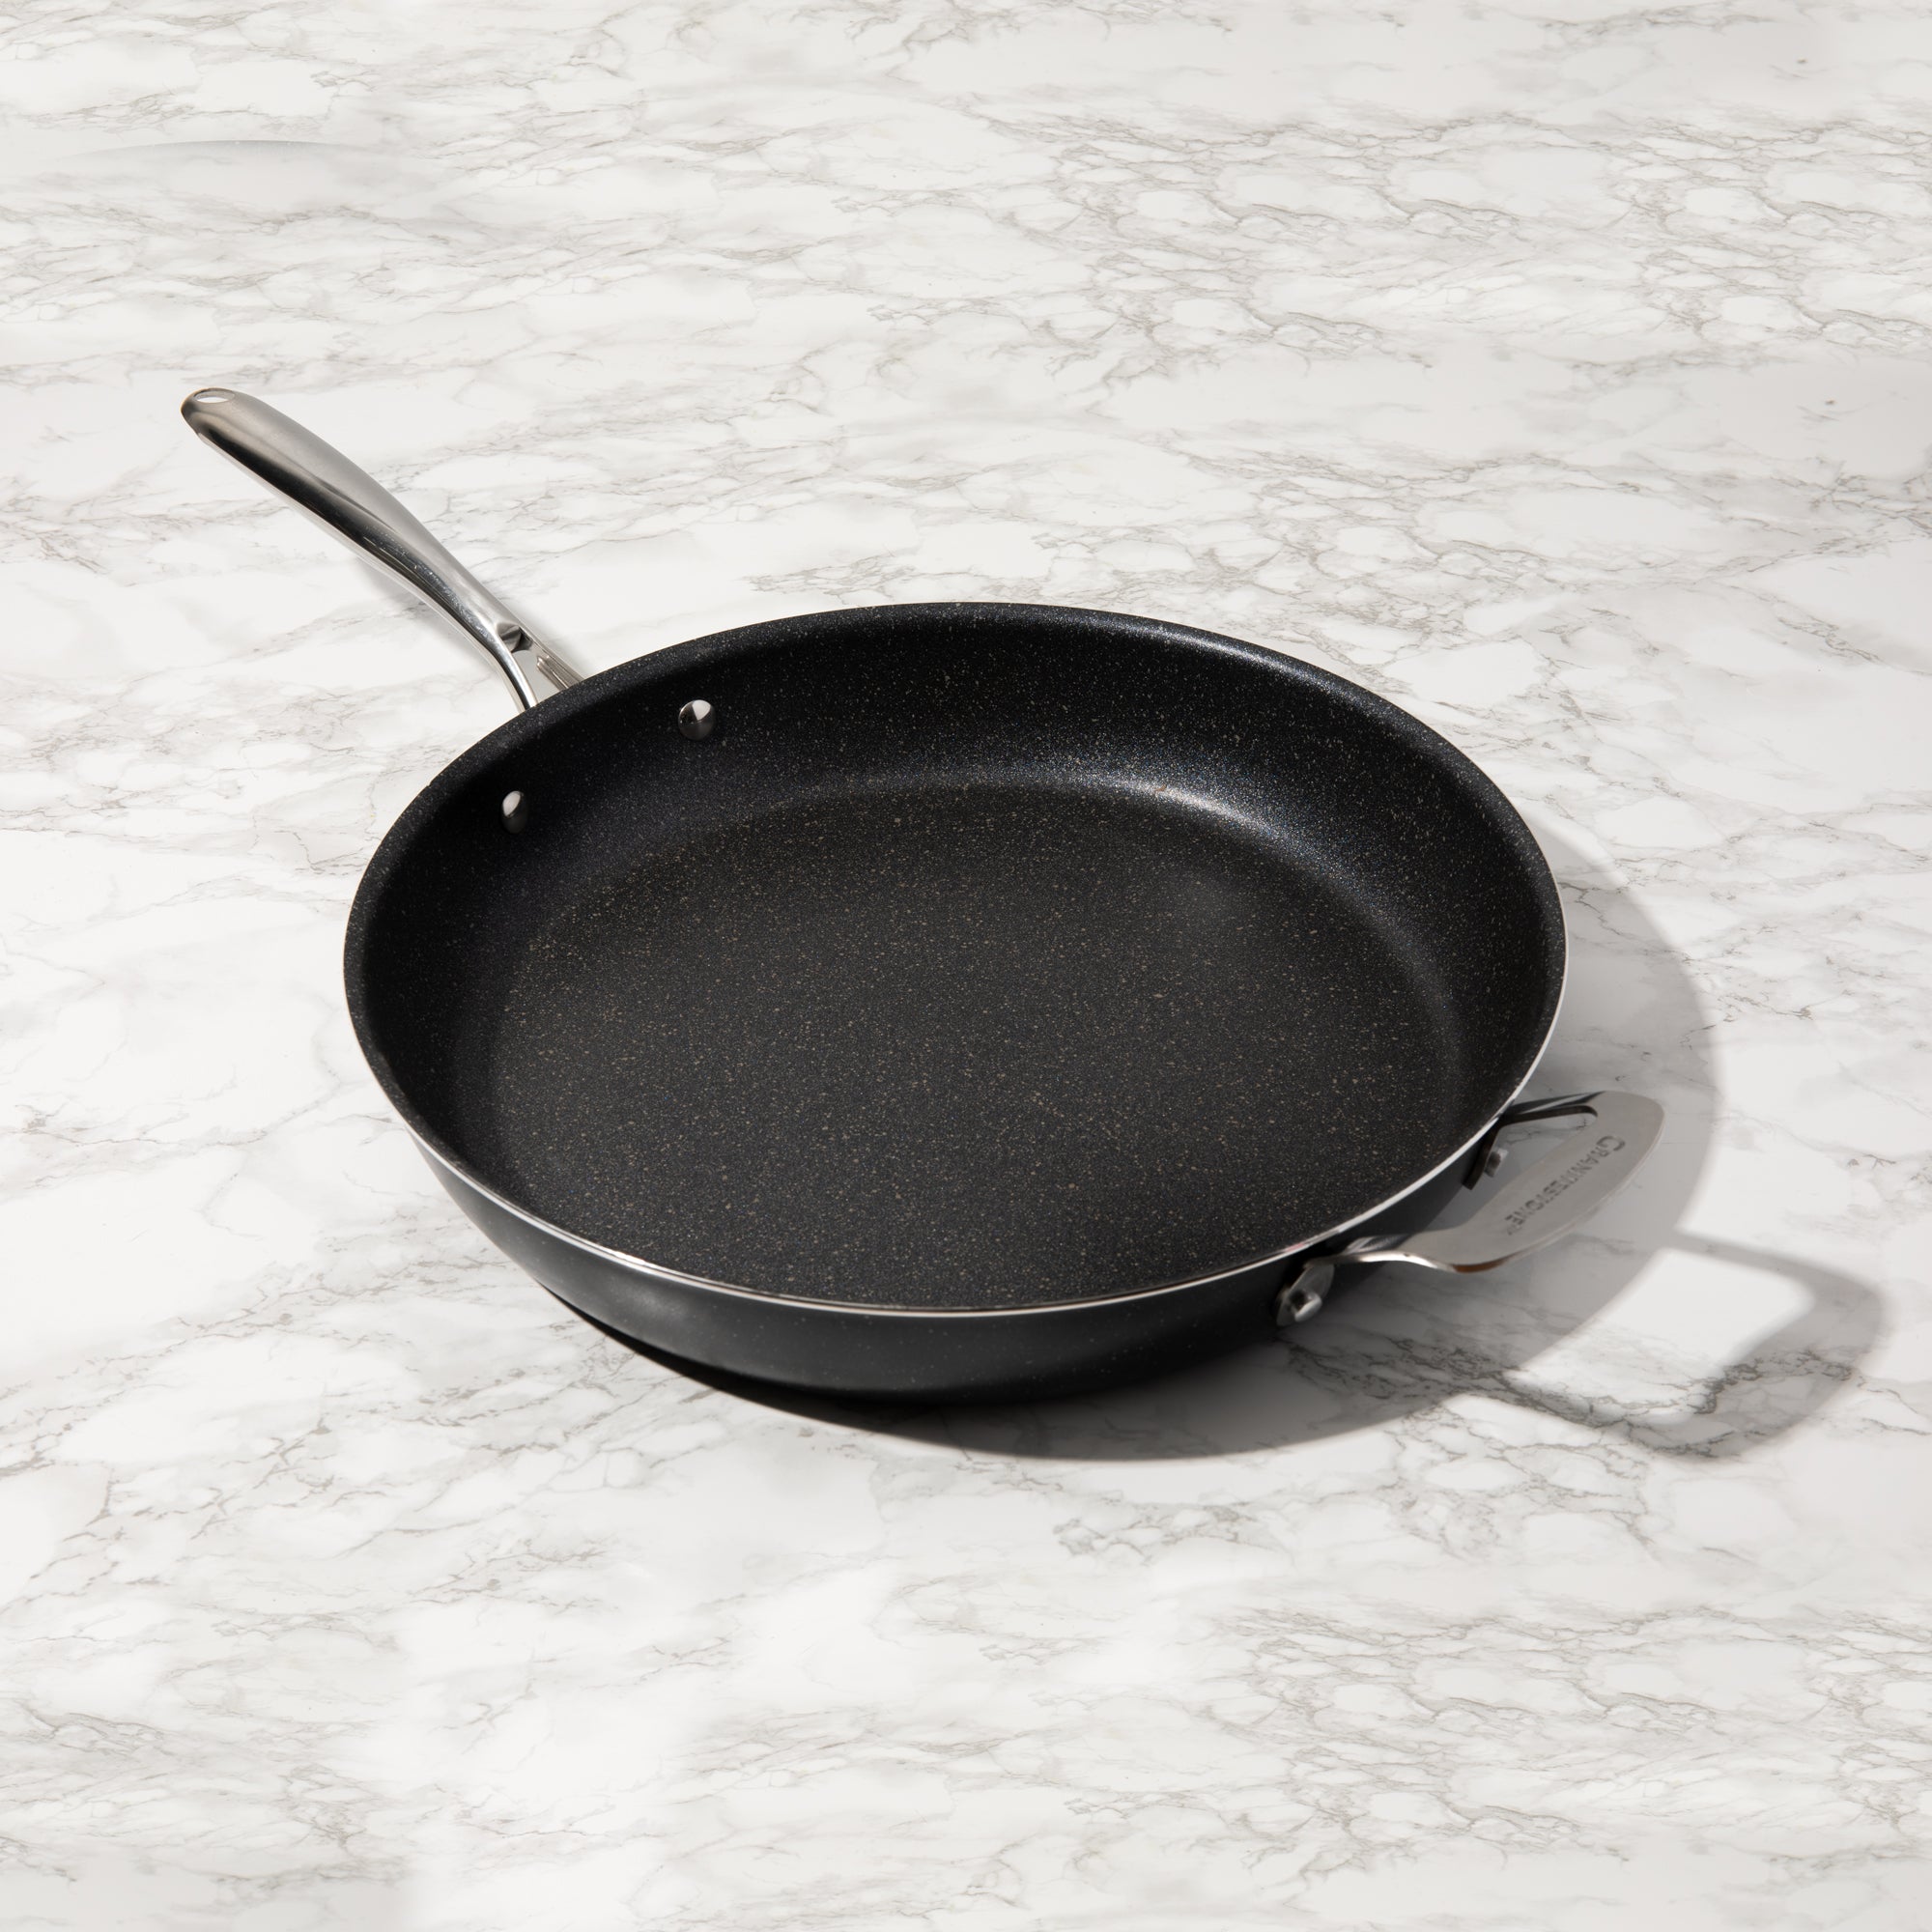 Granitestone Fry Pan 14 inch Nonstick Frying Pan Family Sized Open Skillet